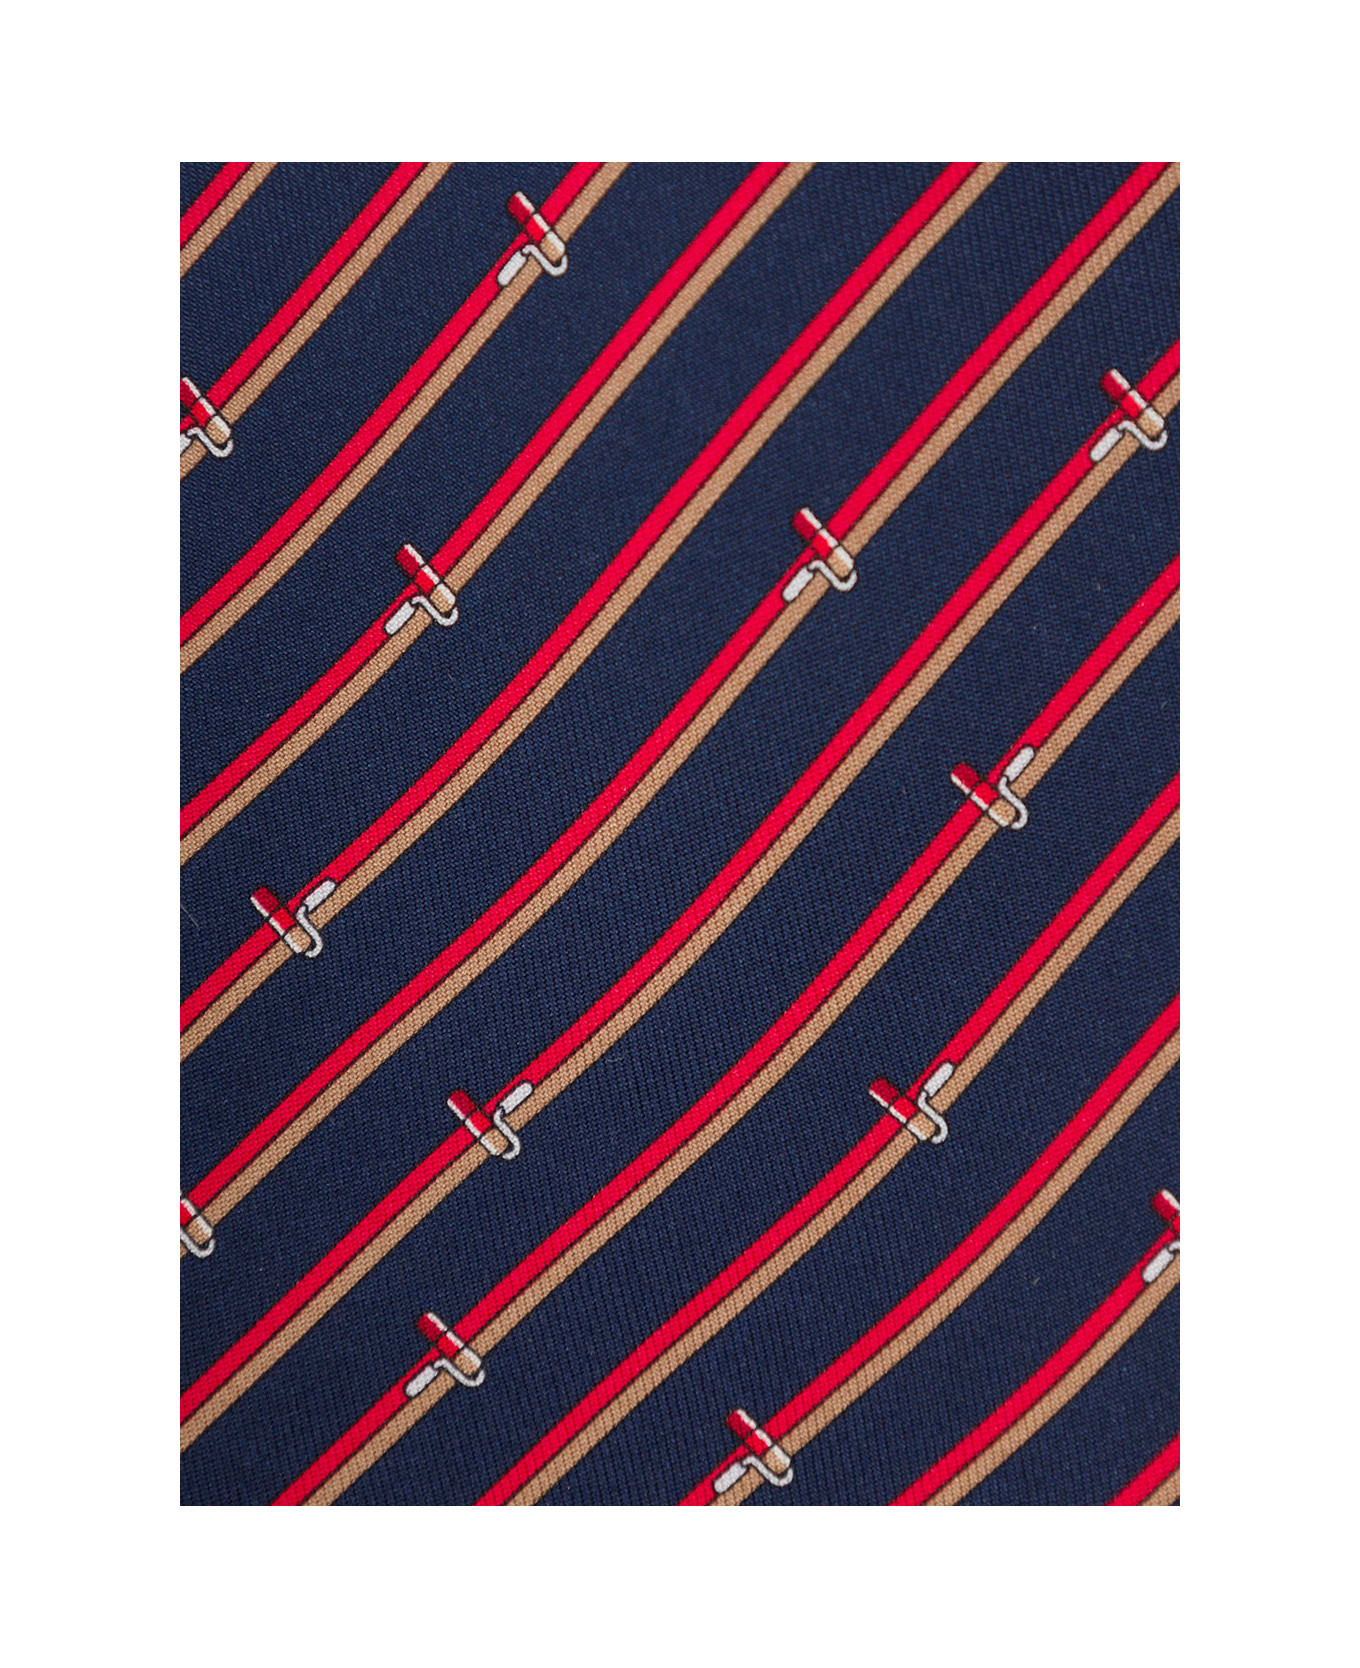 Ferragamo Navy Red And Gold Silk Tie - Blu ネクタイ